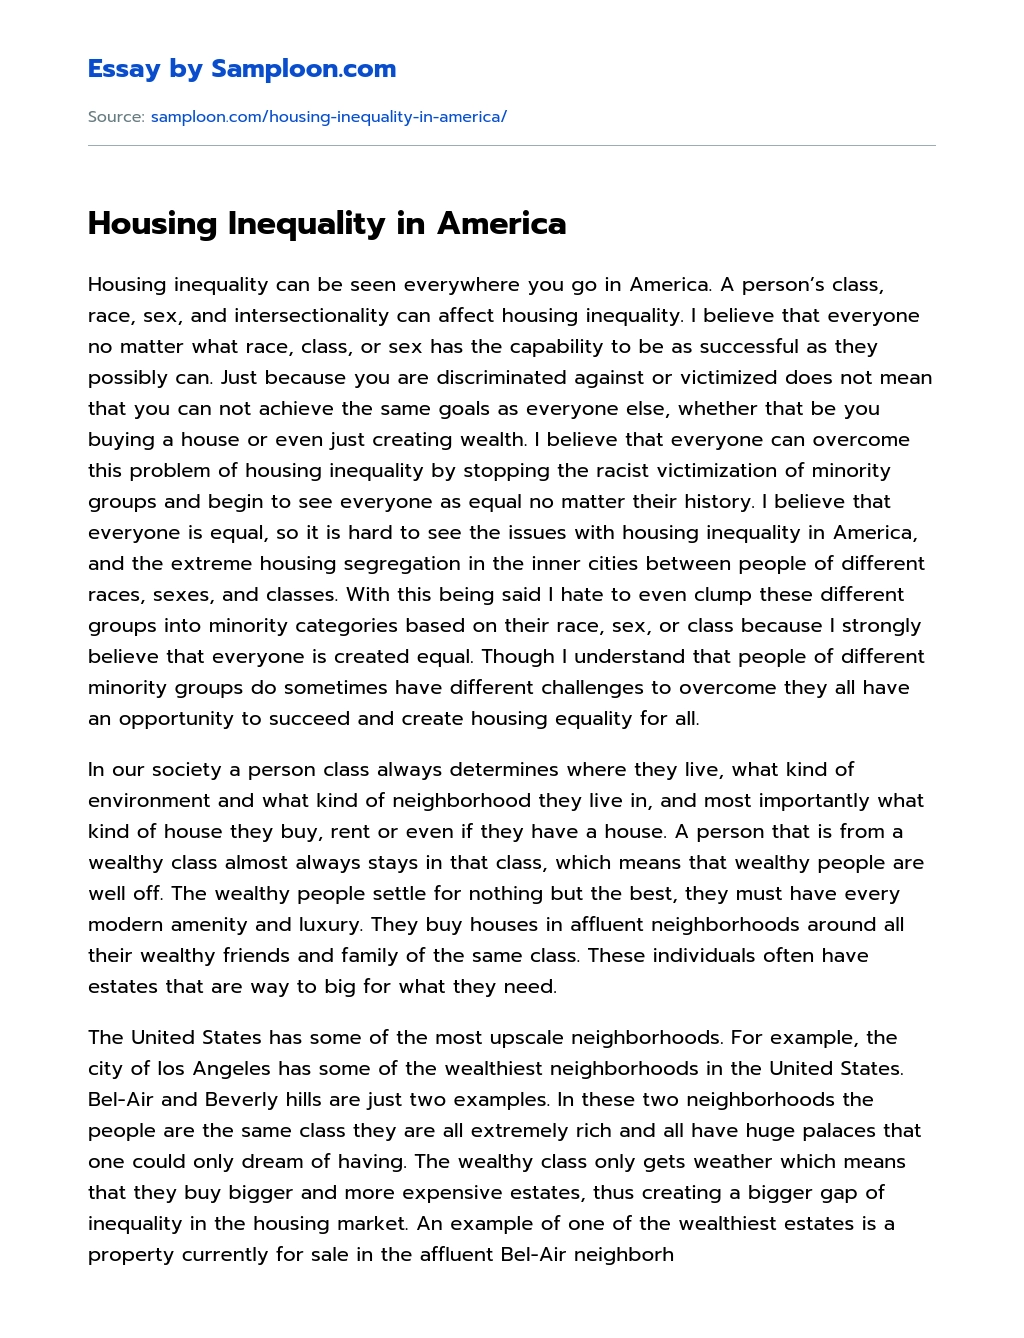 Housing Inequality in America essay